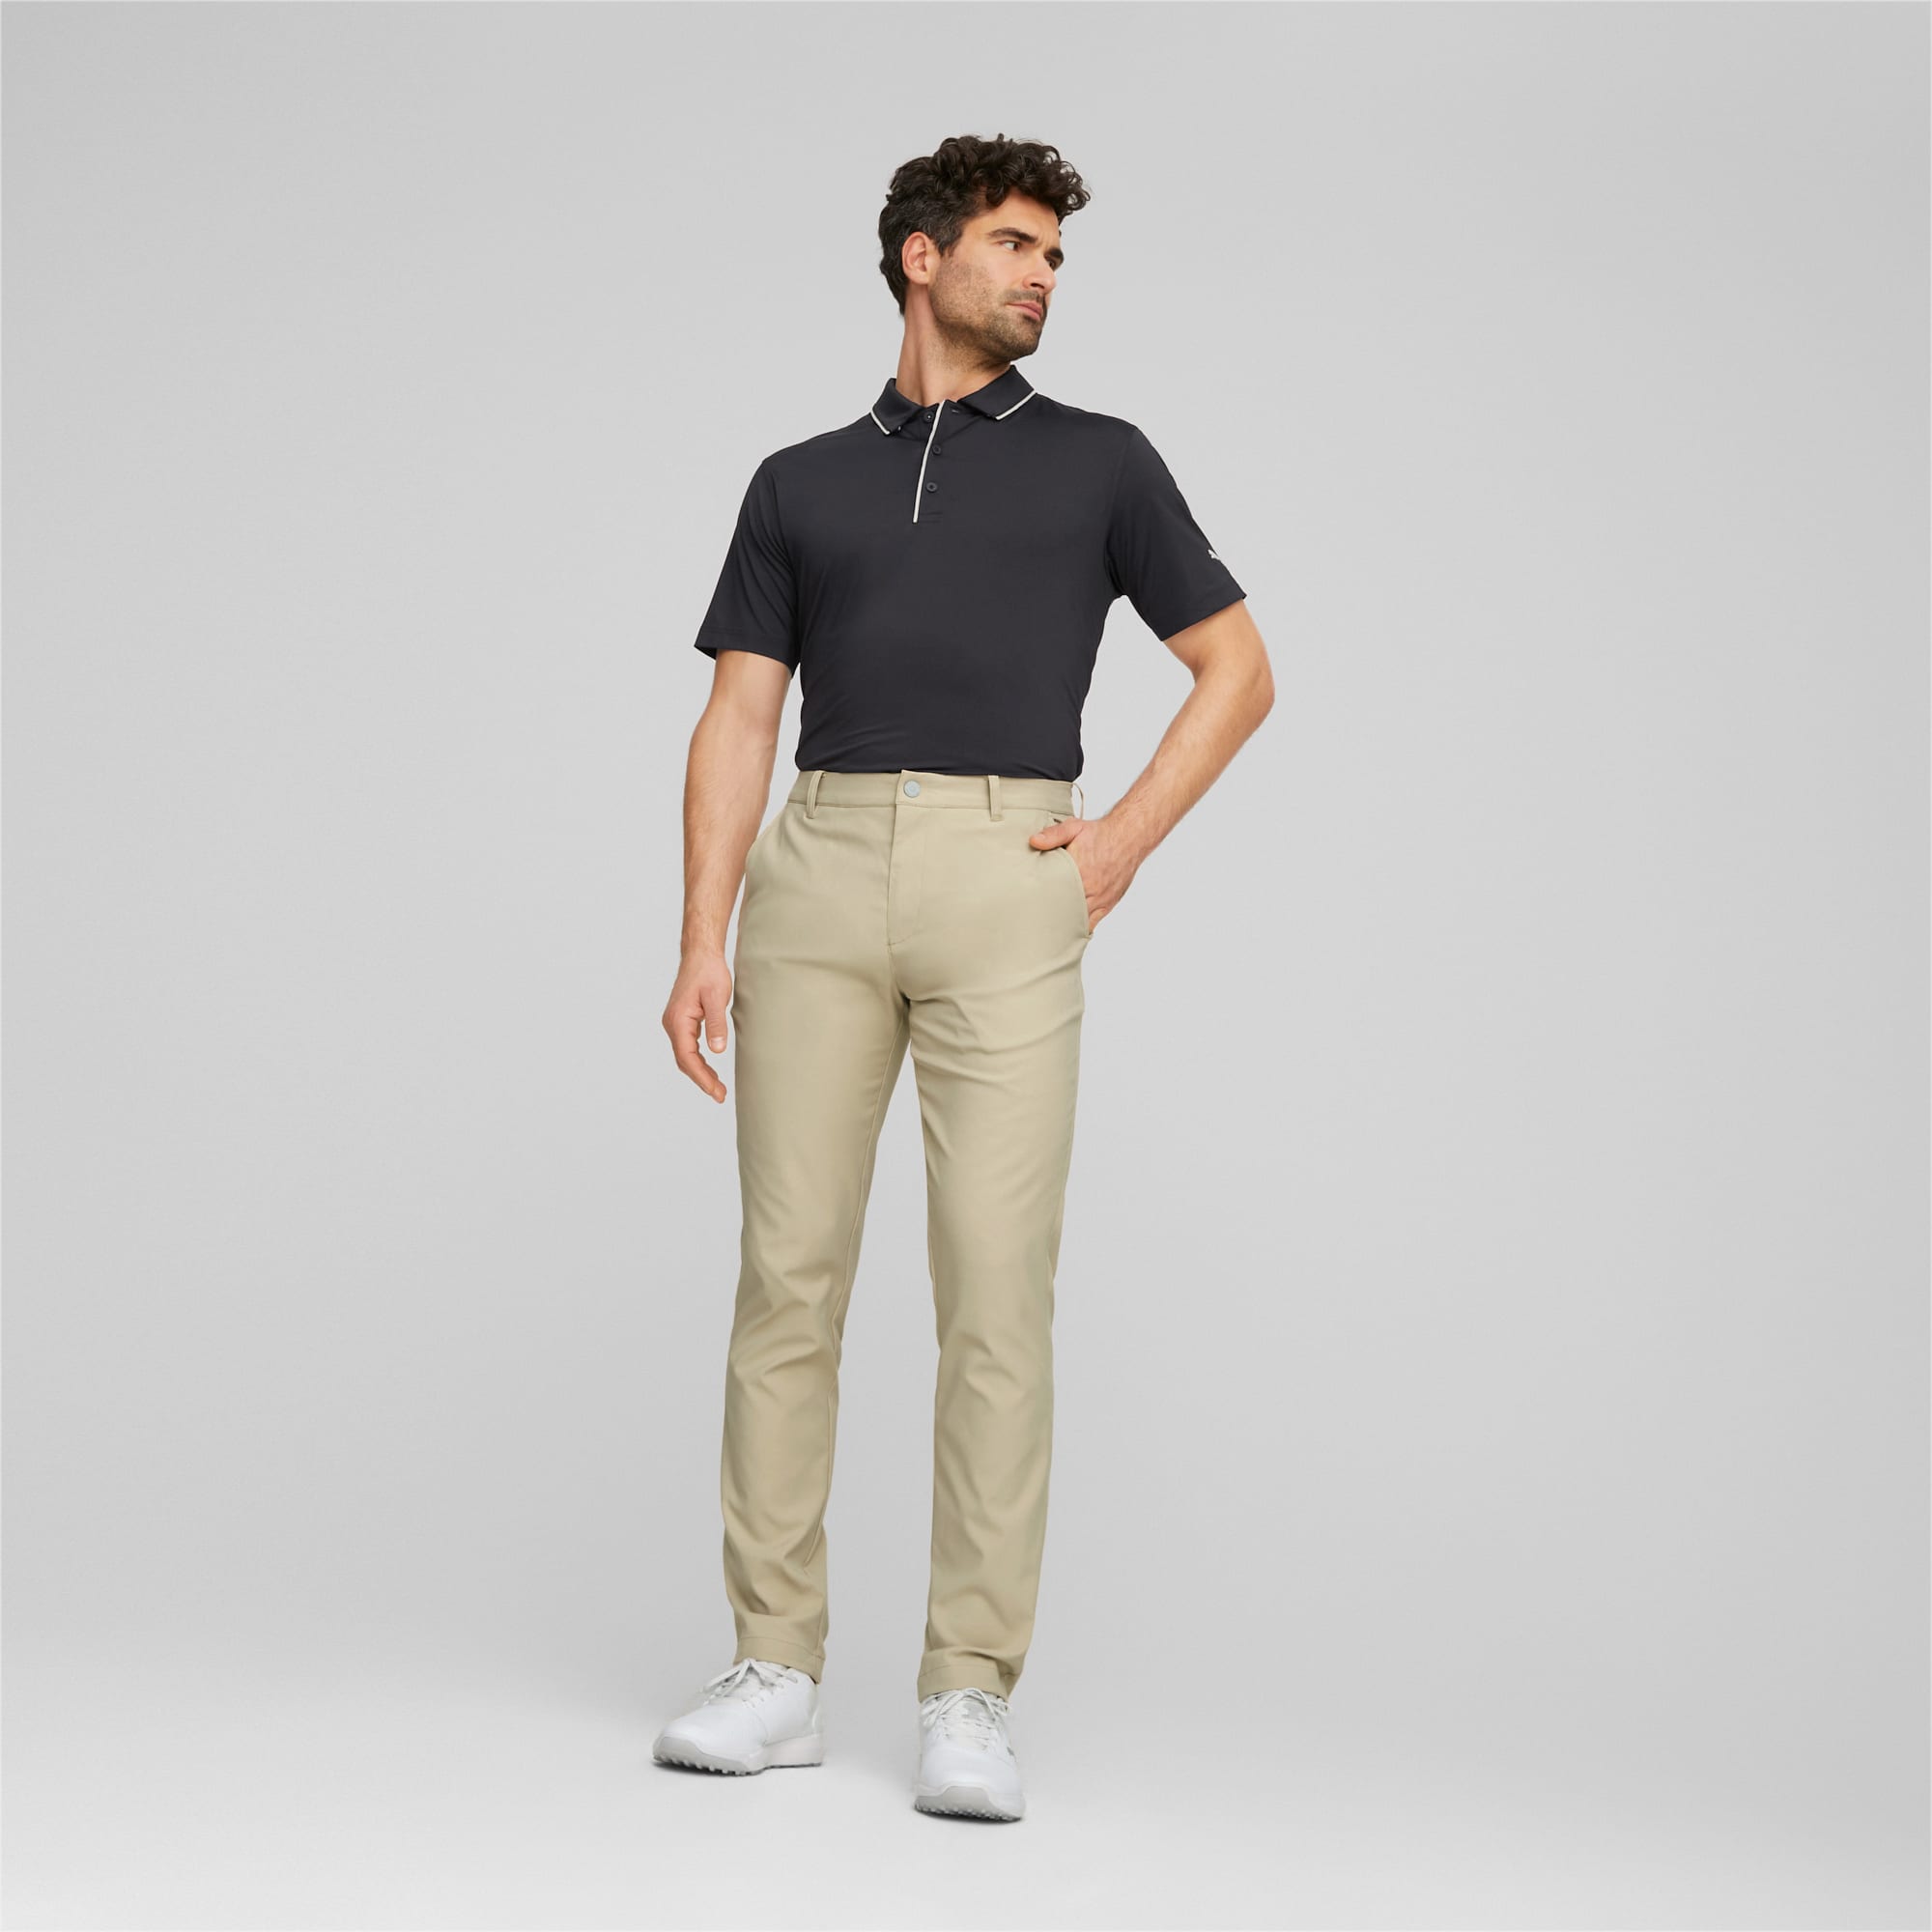 PUMA Dealer Tailored Golf Pants Men, Alabaster, Size 34/34, Clothing